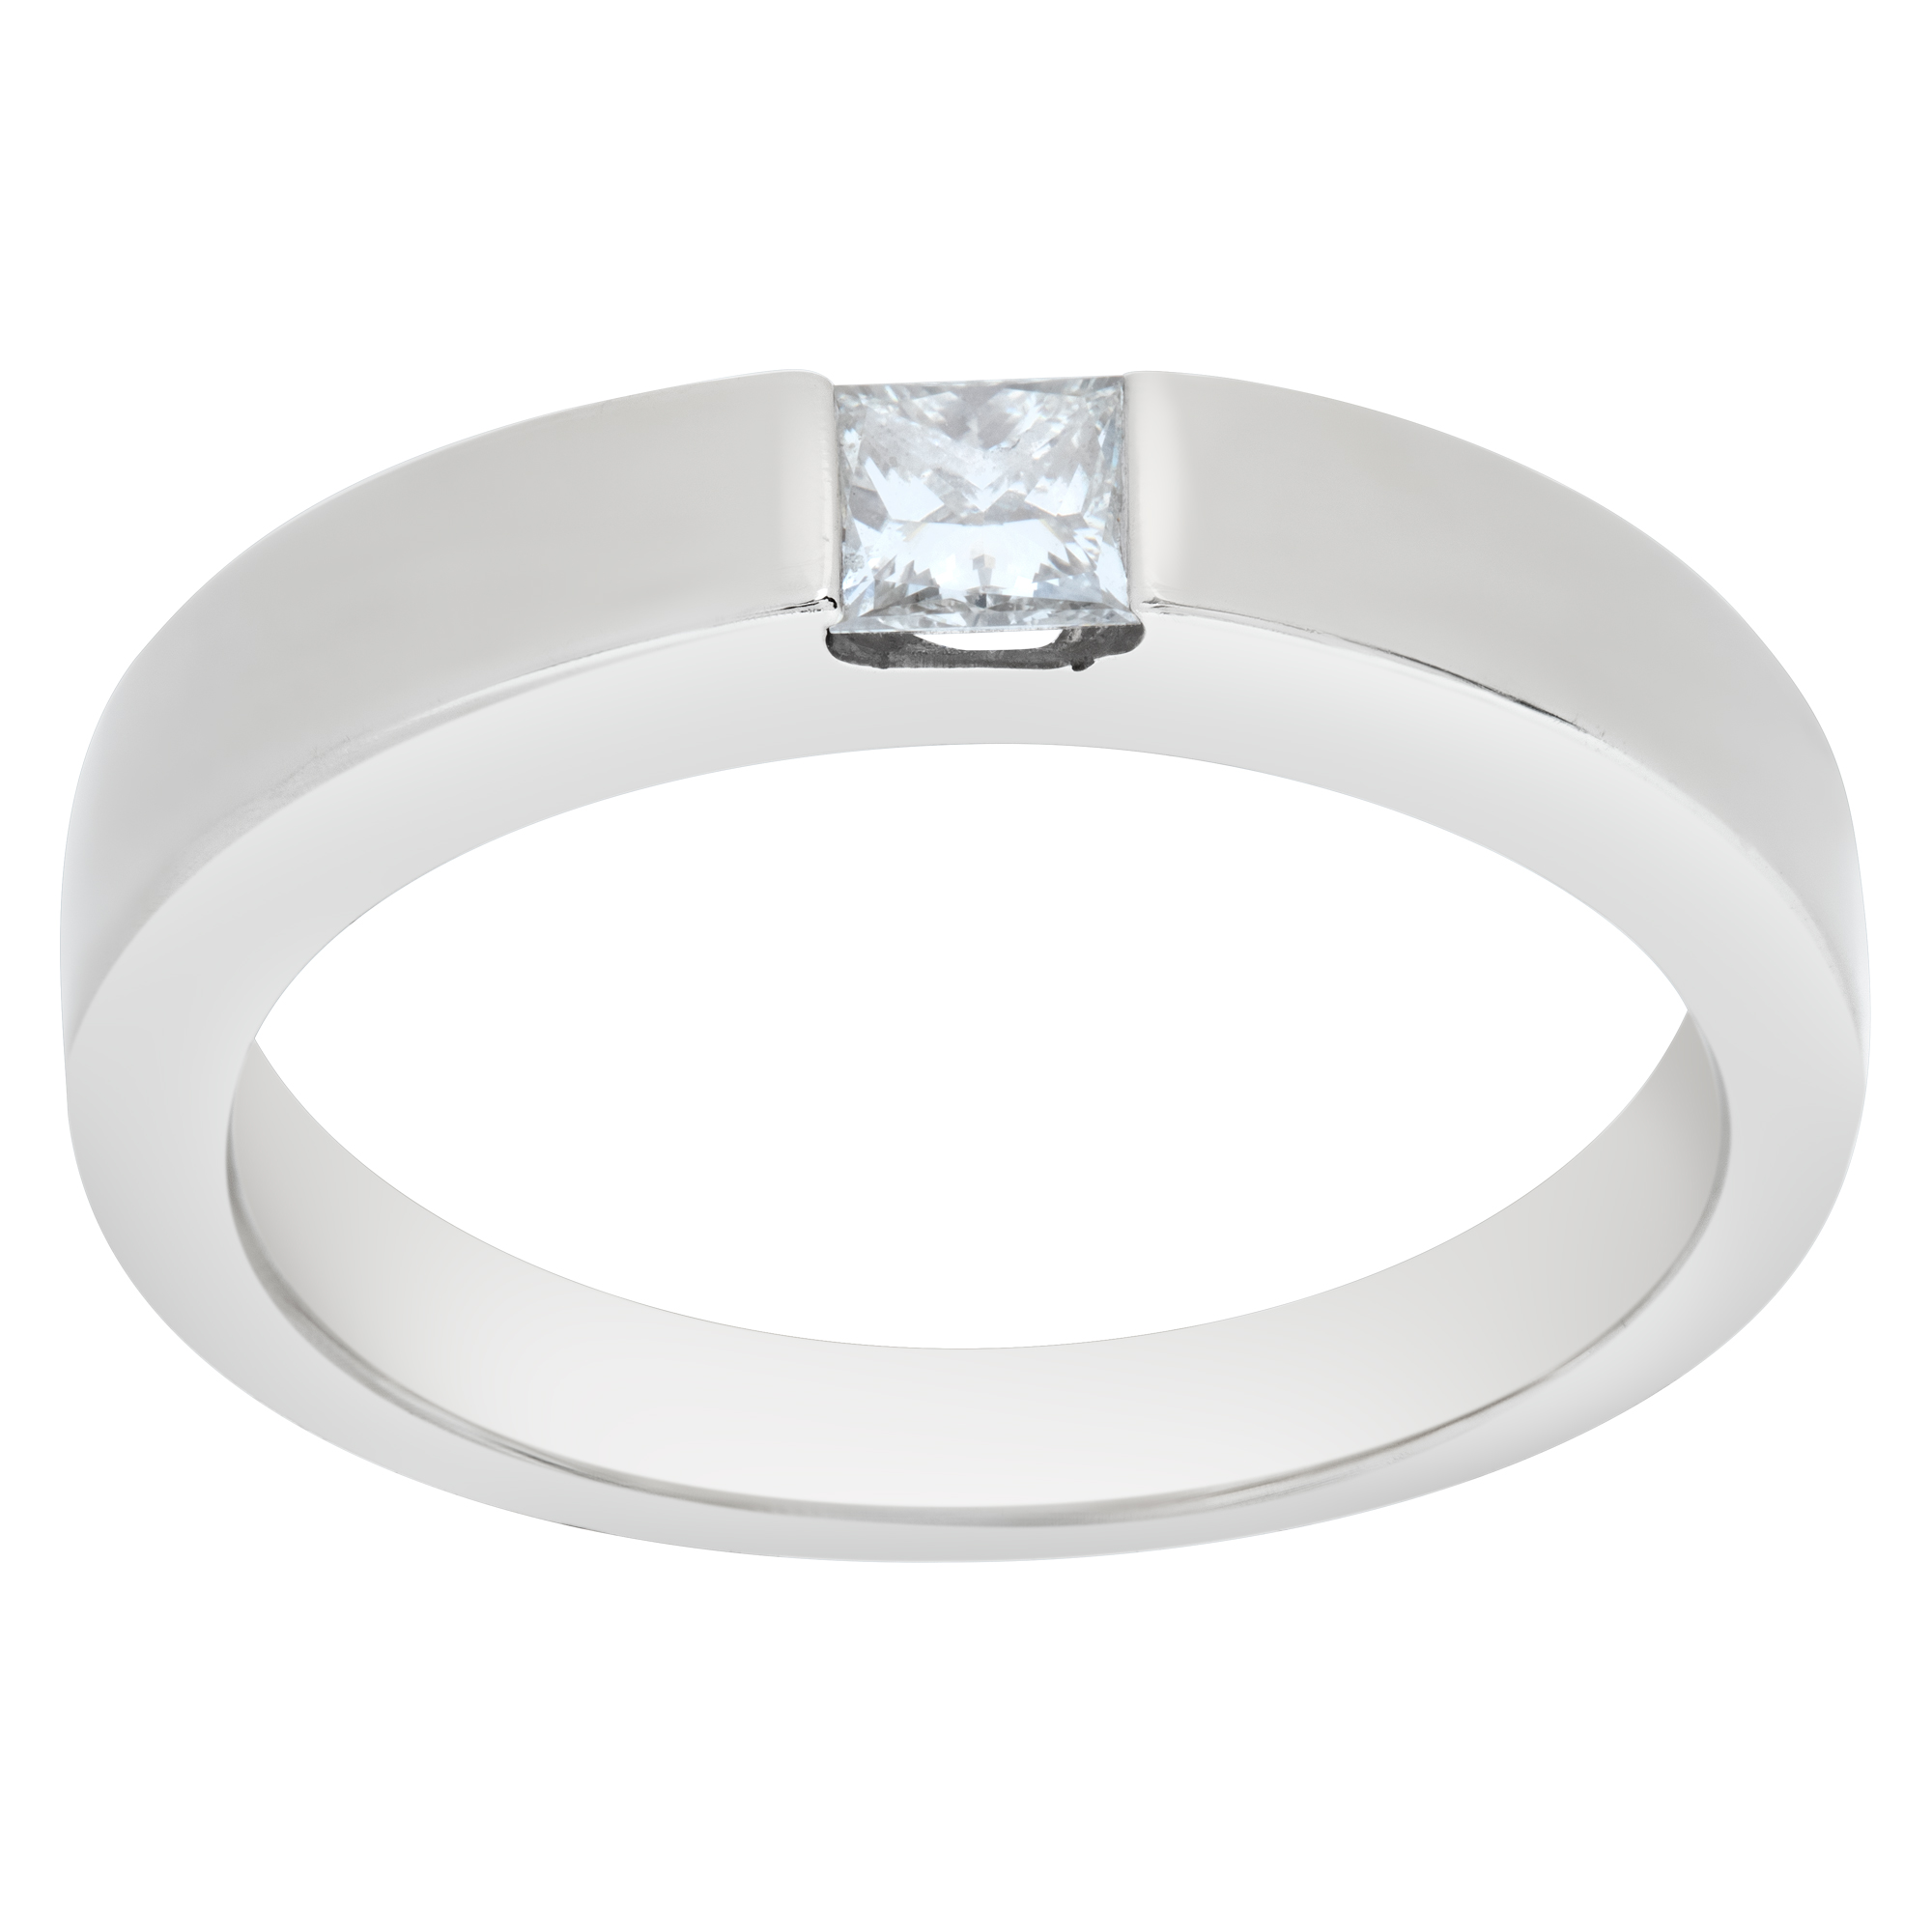 Tension Set Princess Cut Diamond ring. 0.25 carat diamond. Size 7.75 image 1